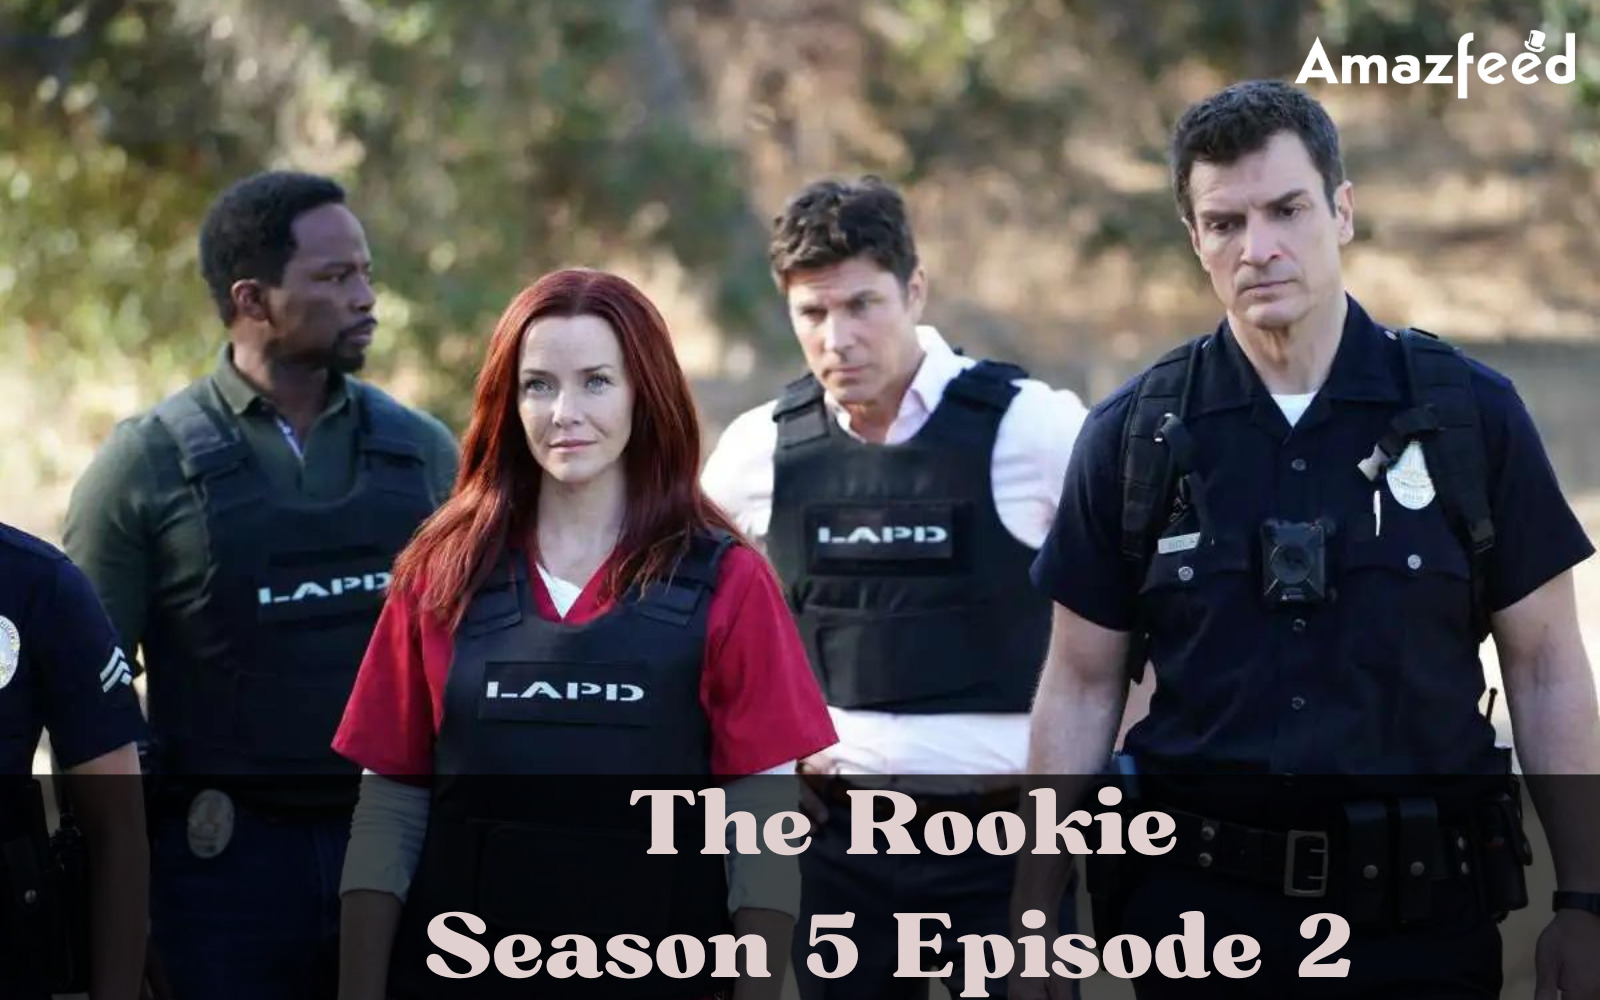 The Rookie Season 5 Episode 2 Spoiler